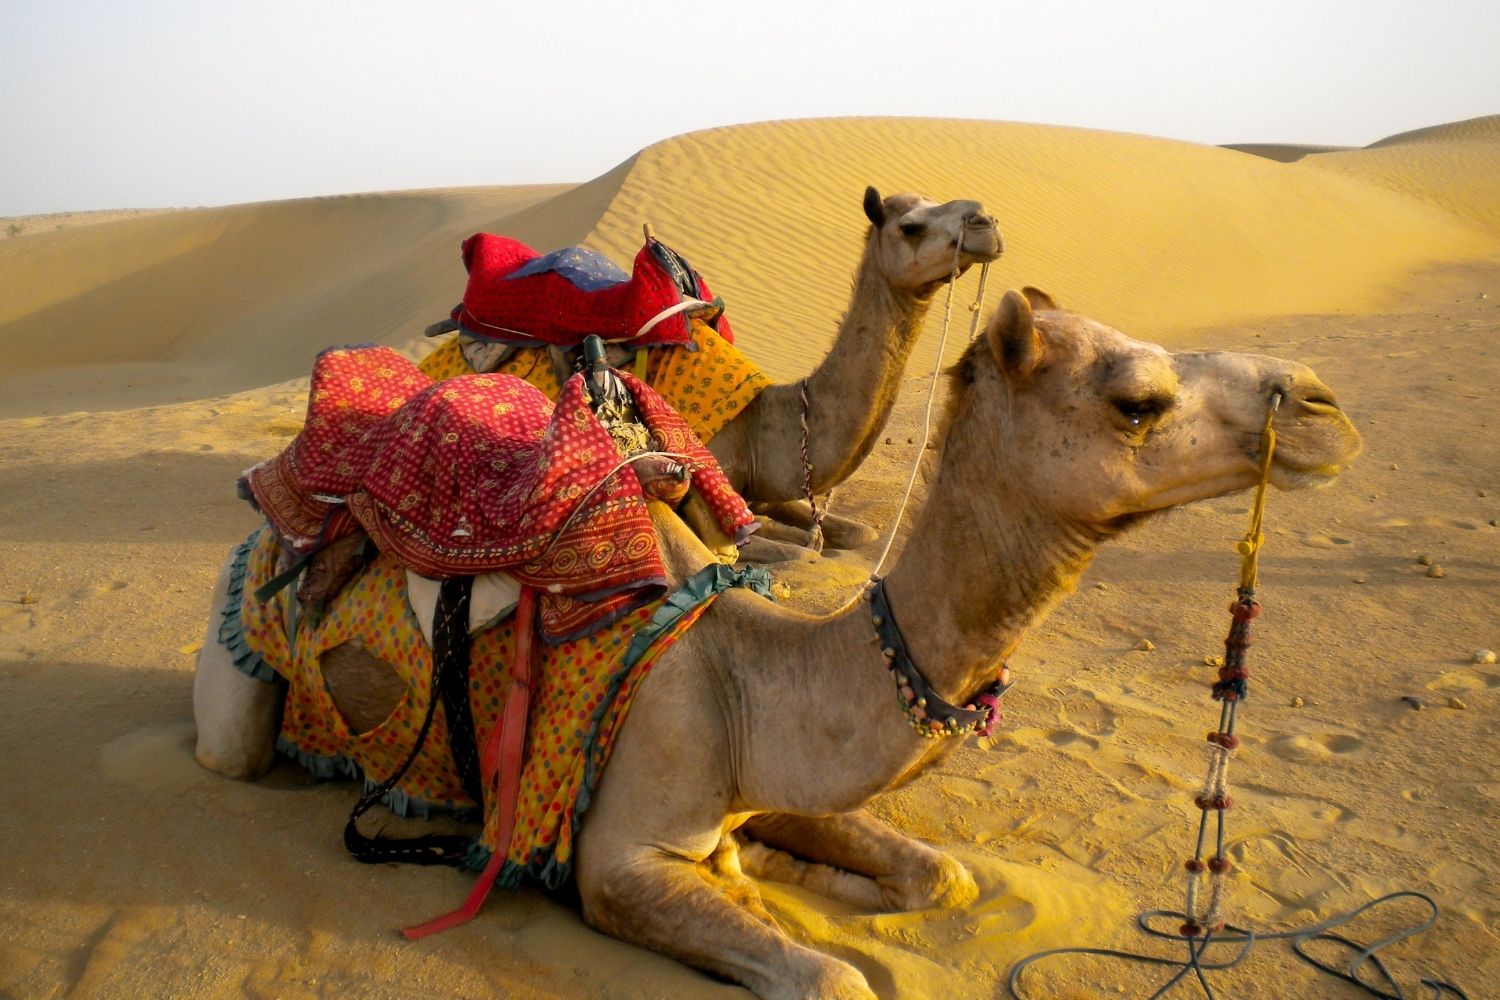 Desert and Camel Safari